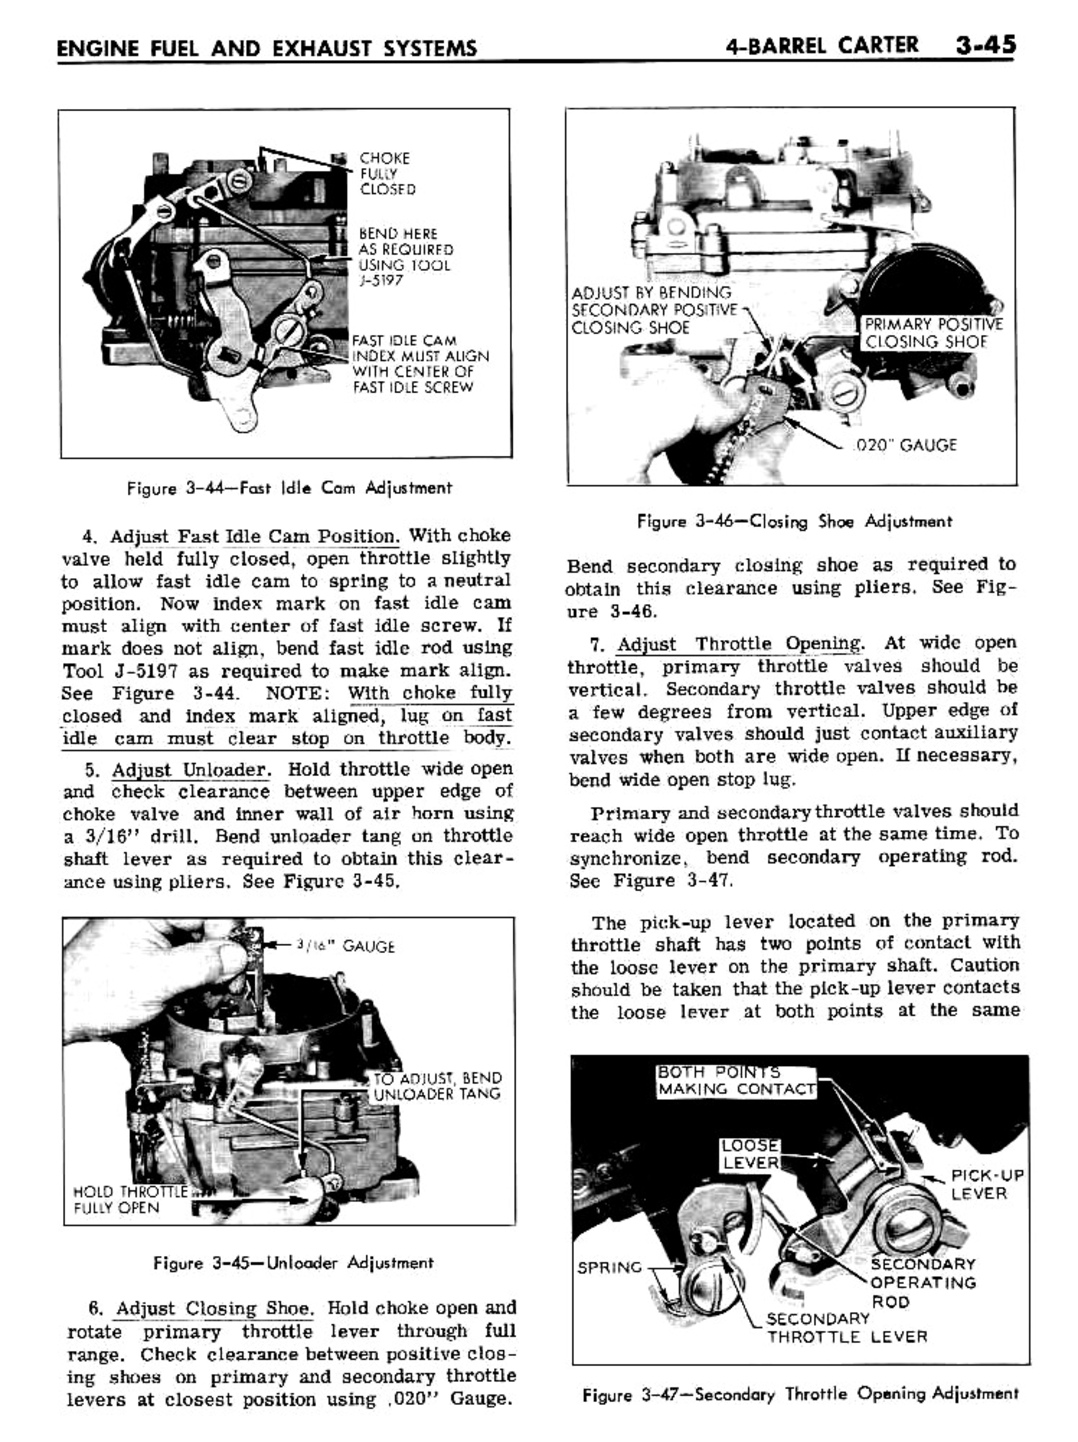 n_04 1961 Buick Shop Manual - Engine Fuel & Exhaust-045-045.jpg